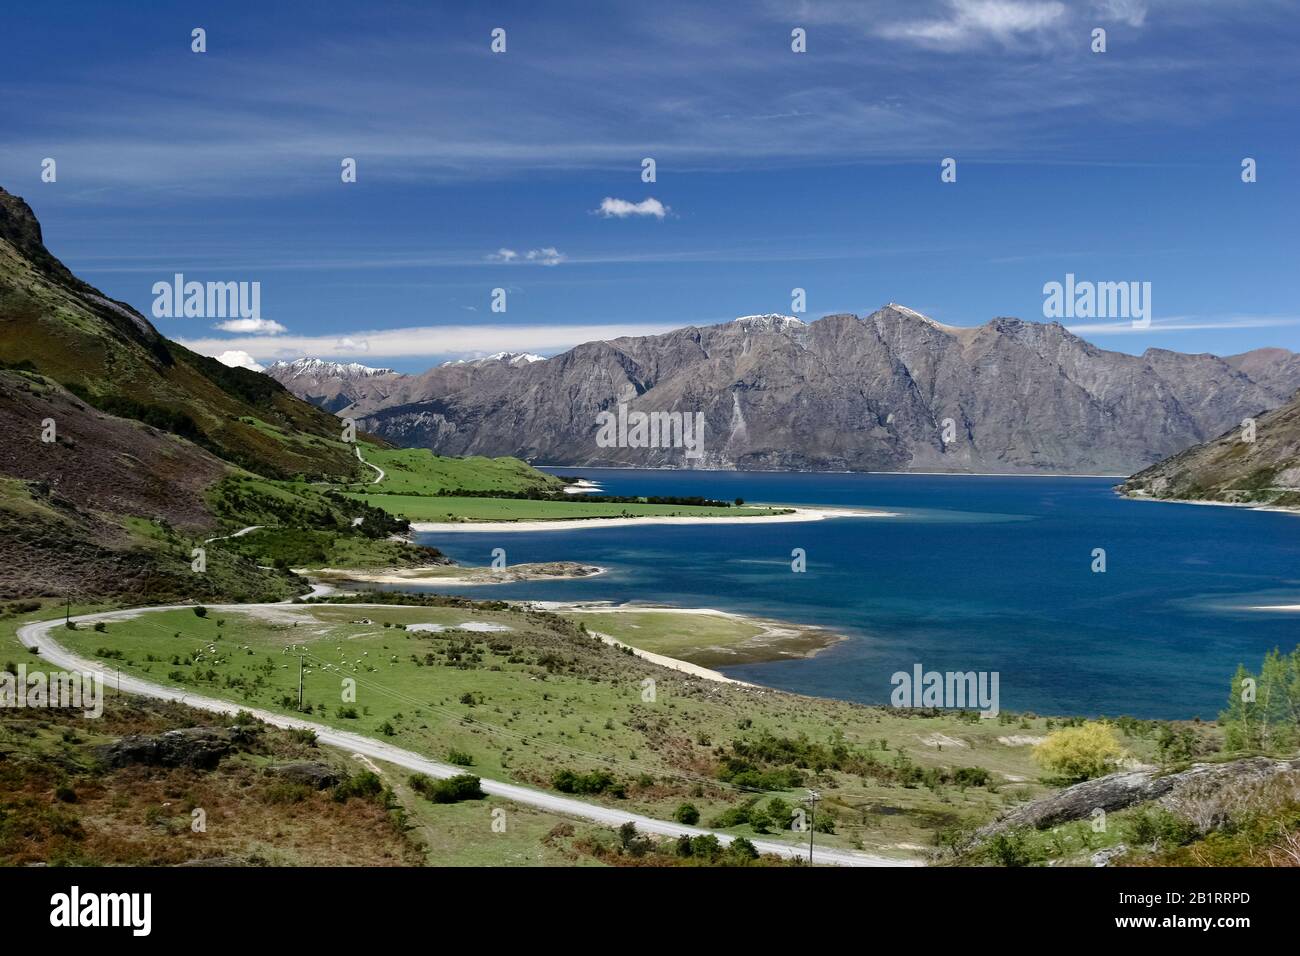 New Zealand Alps, South Island, New Zealand Stock Photo